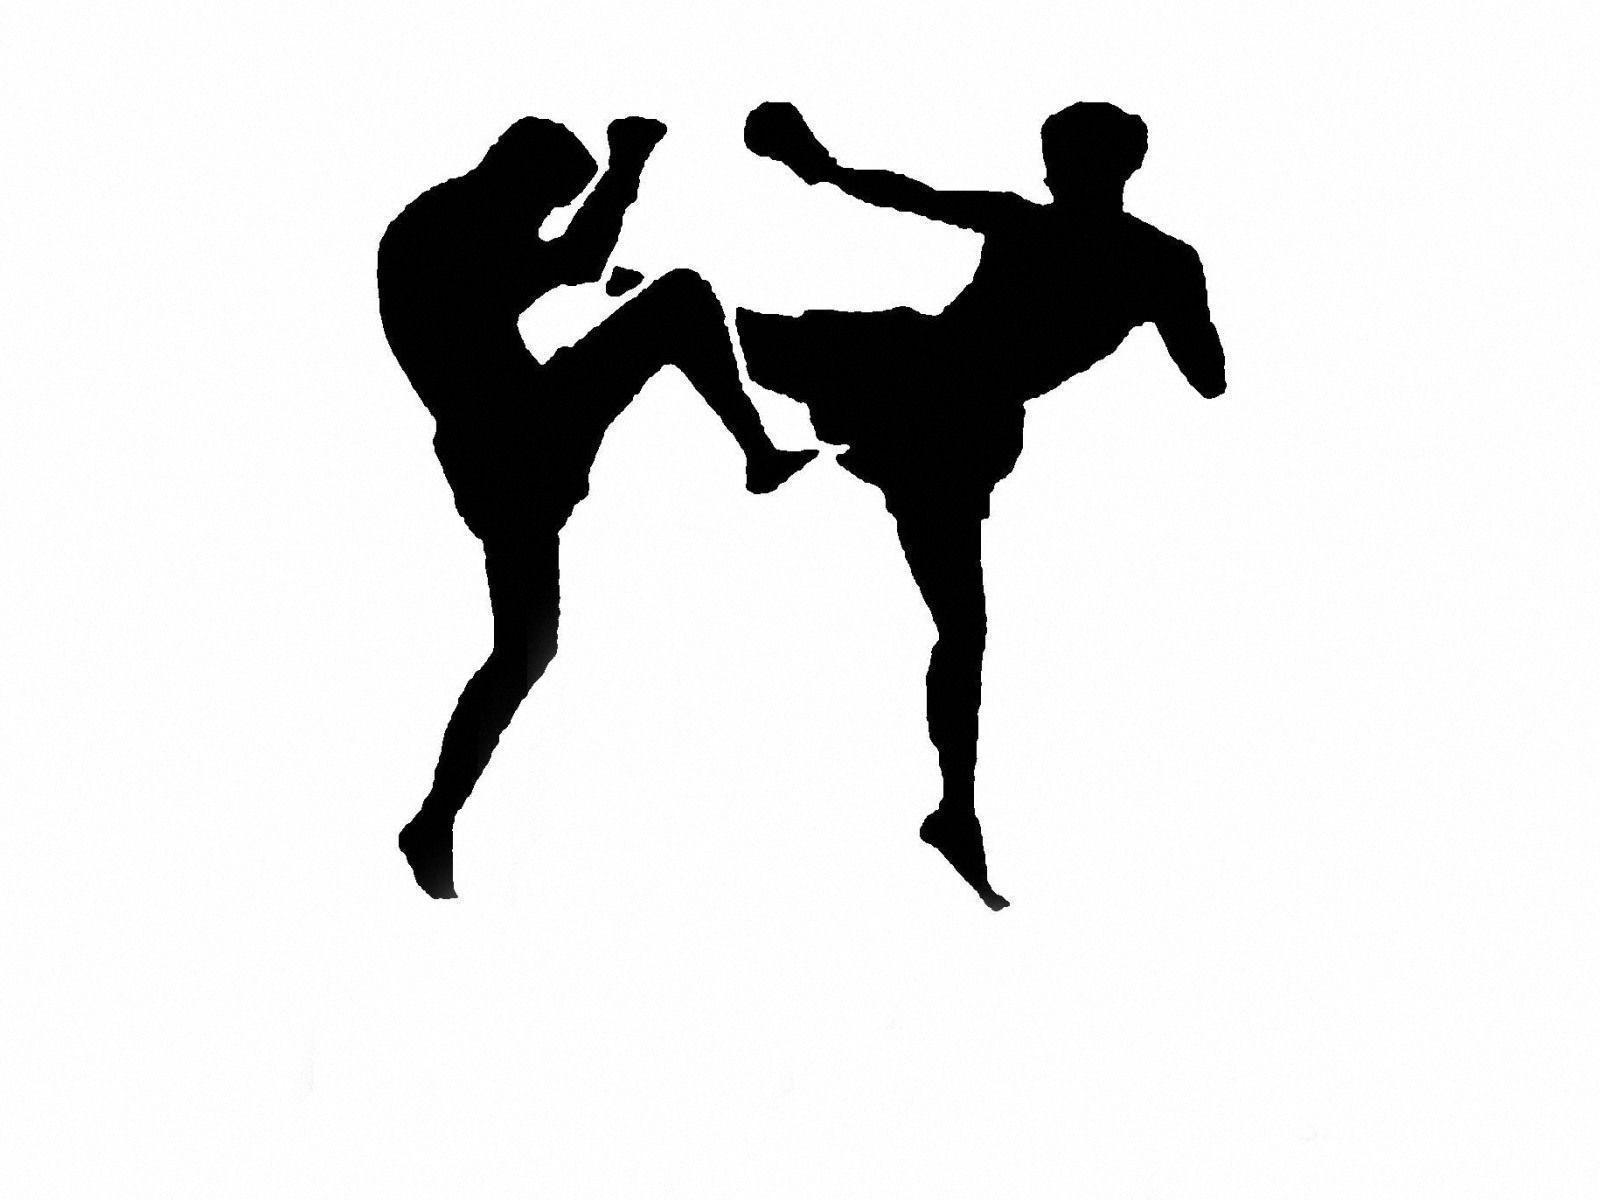 Kickboxing image 1600x1200 Wallpaper, 1600x1200 Wallpaper